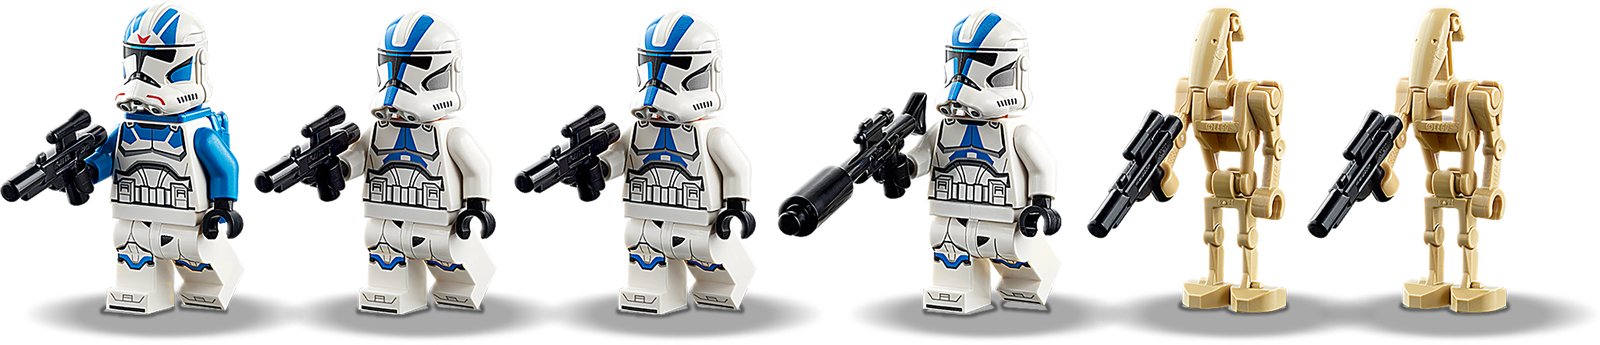 Lego Star Wars 501st Legion Clone Troopers 75280